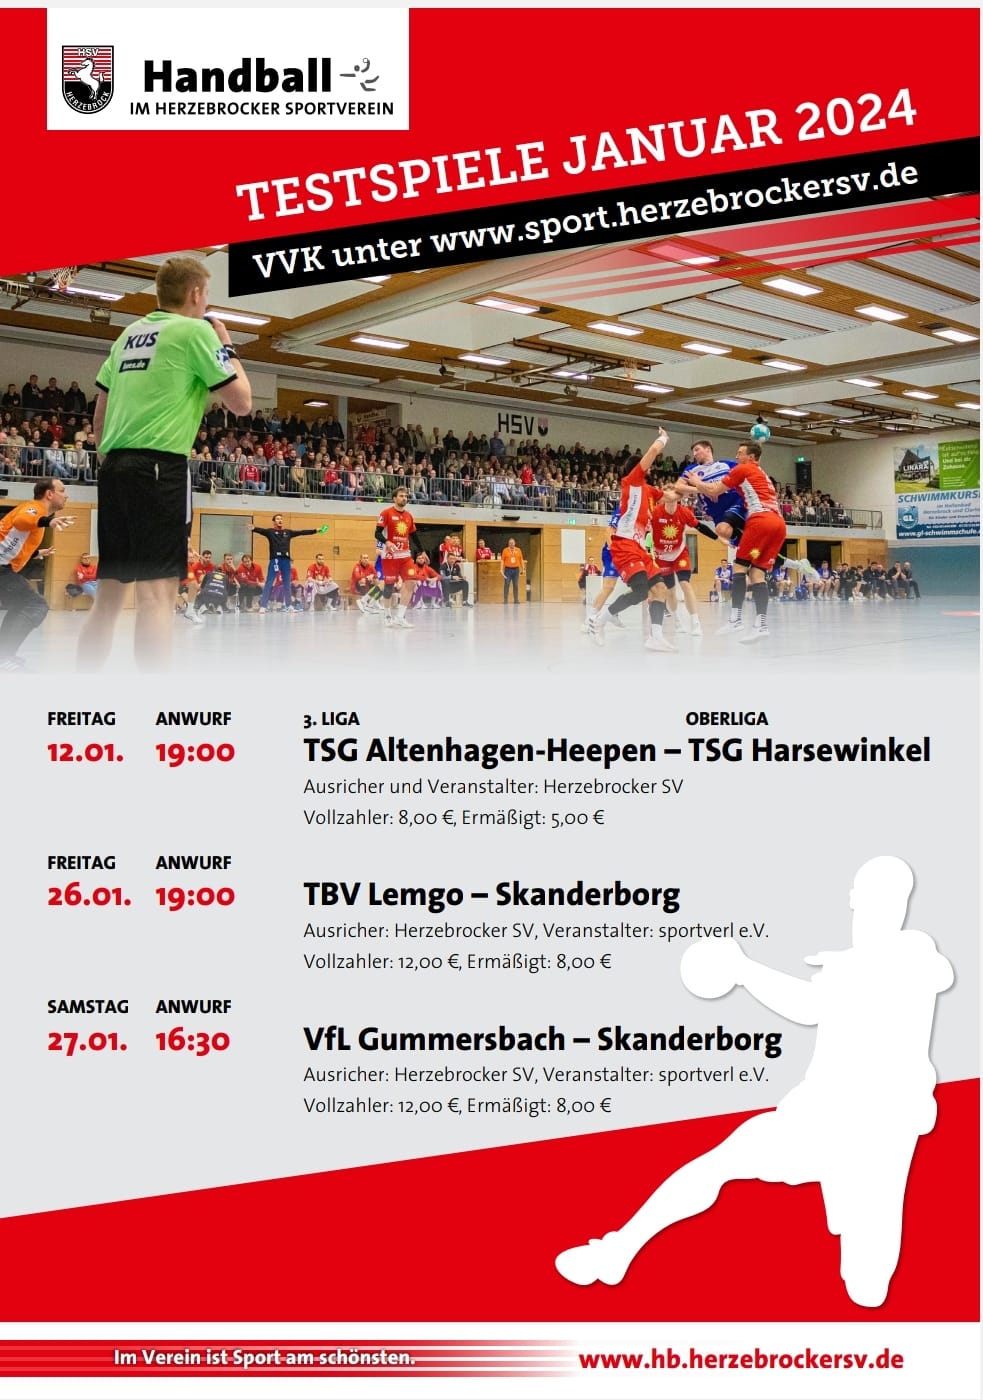 Handball Testspiele 2024 in Herzebrock